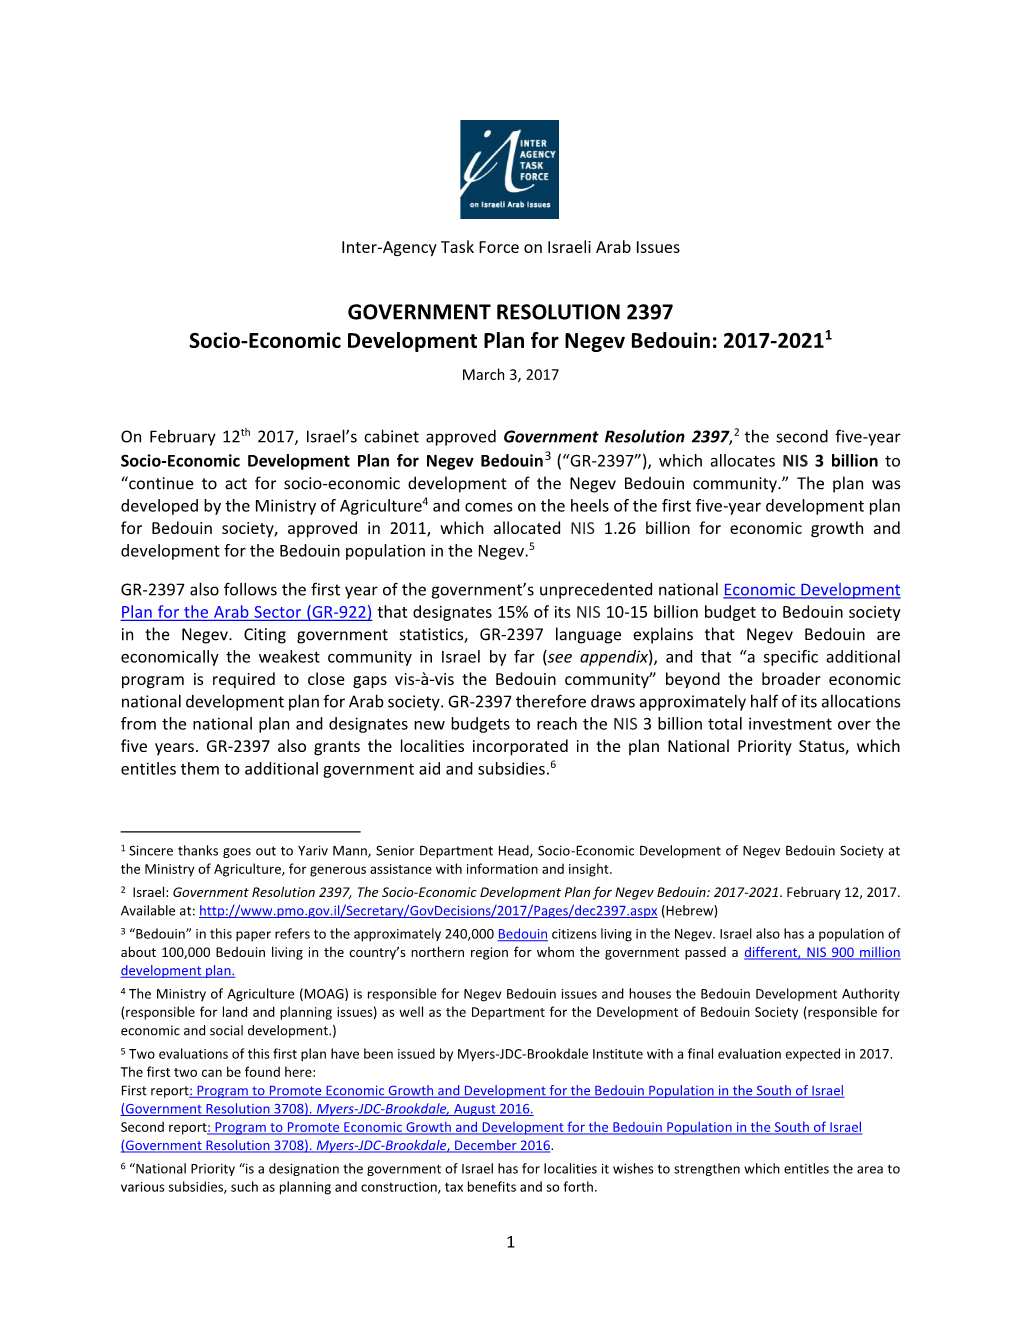 GOVERNMENT RESOLUTION 2397 Socio-Economic Development Plan for Negev Bedouin: 2017-20211 March 3, 2017